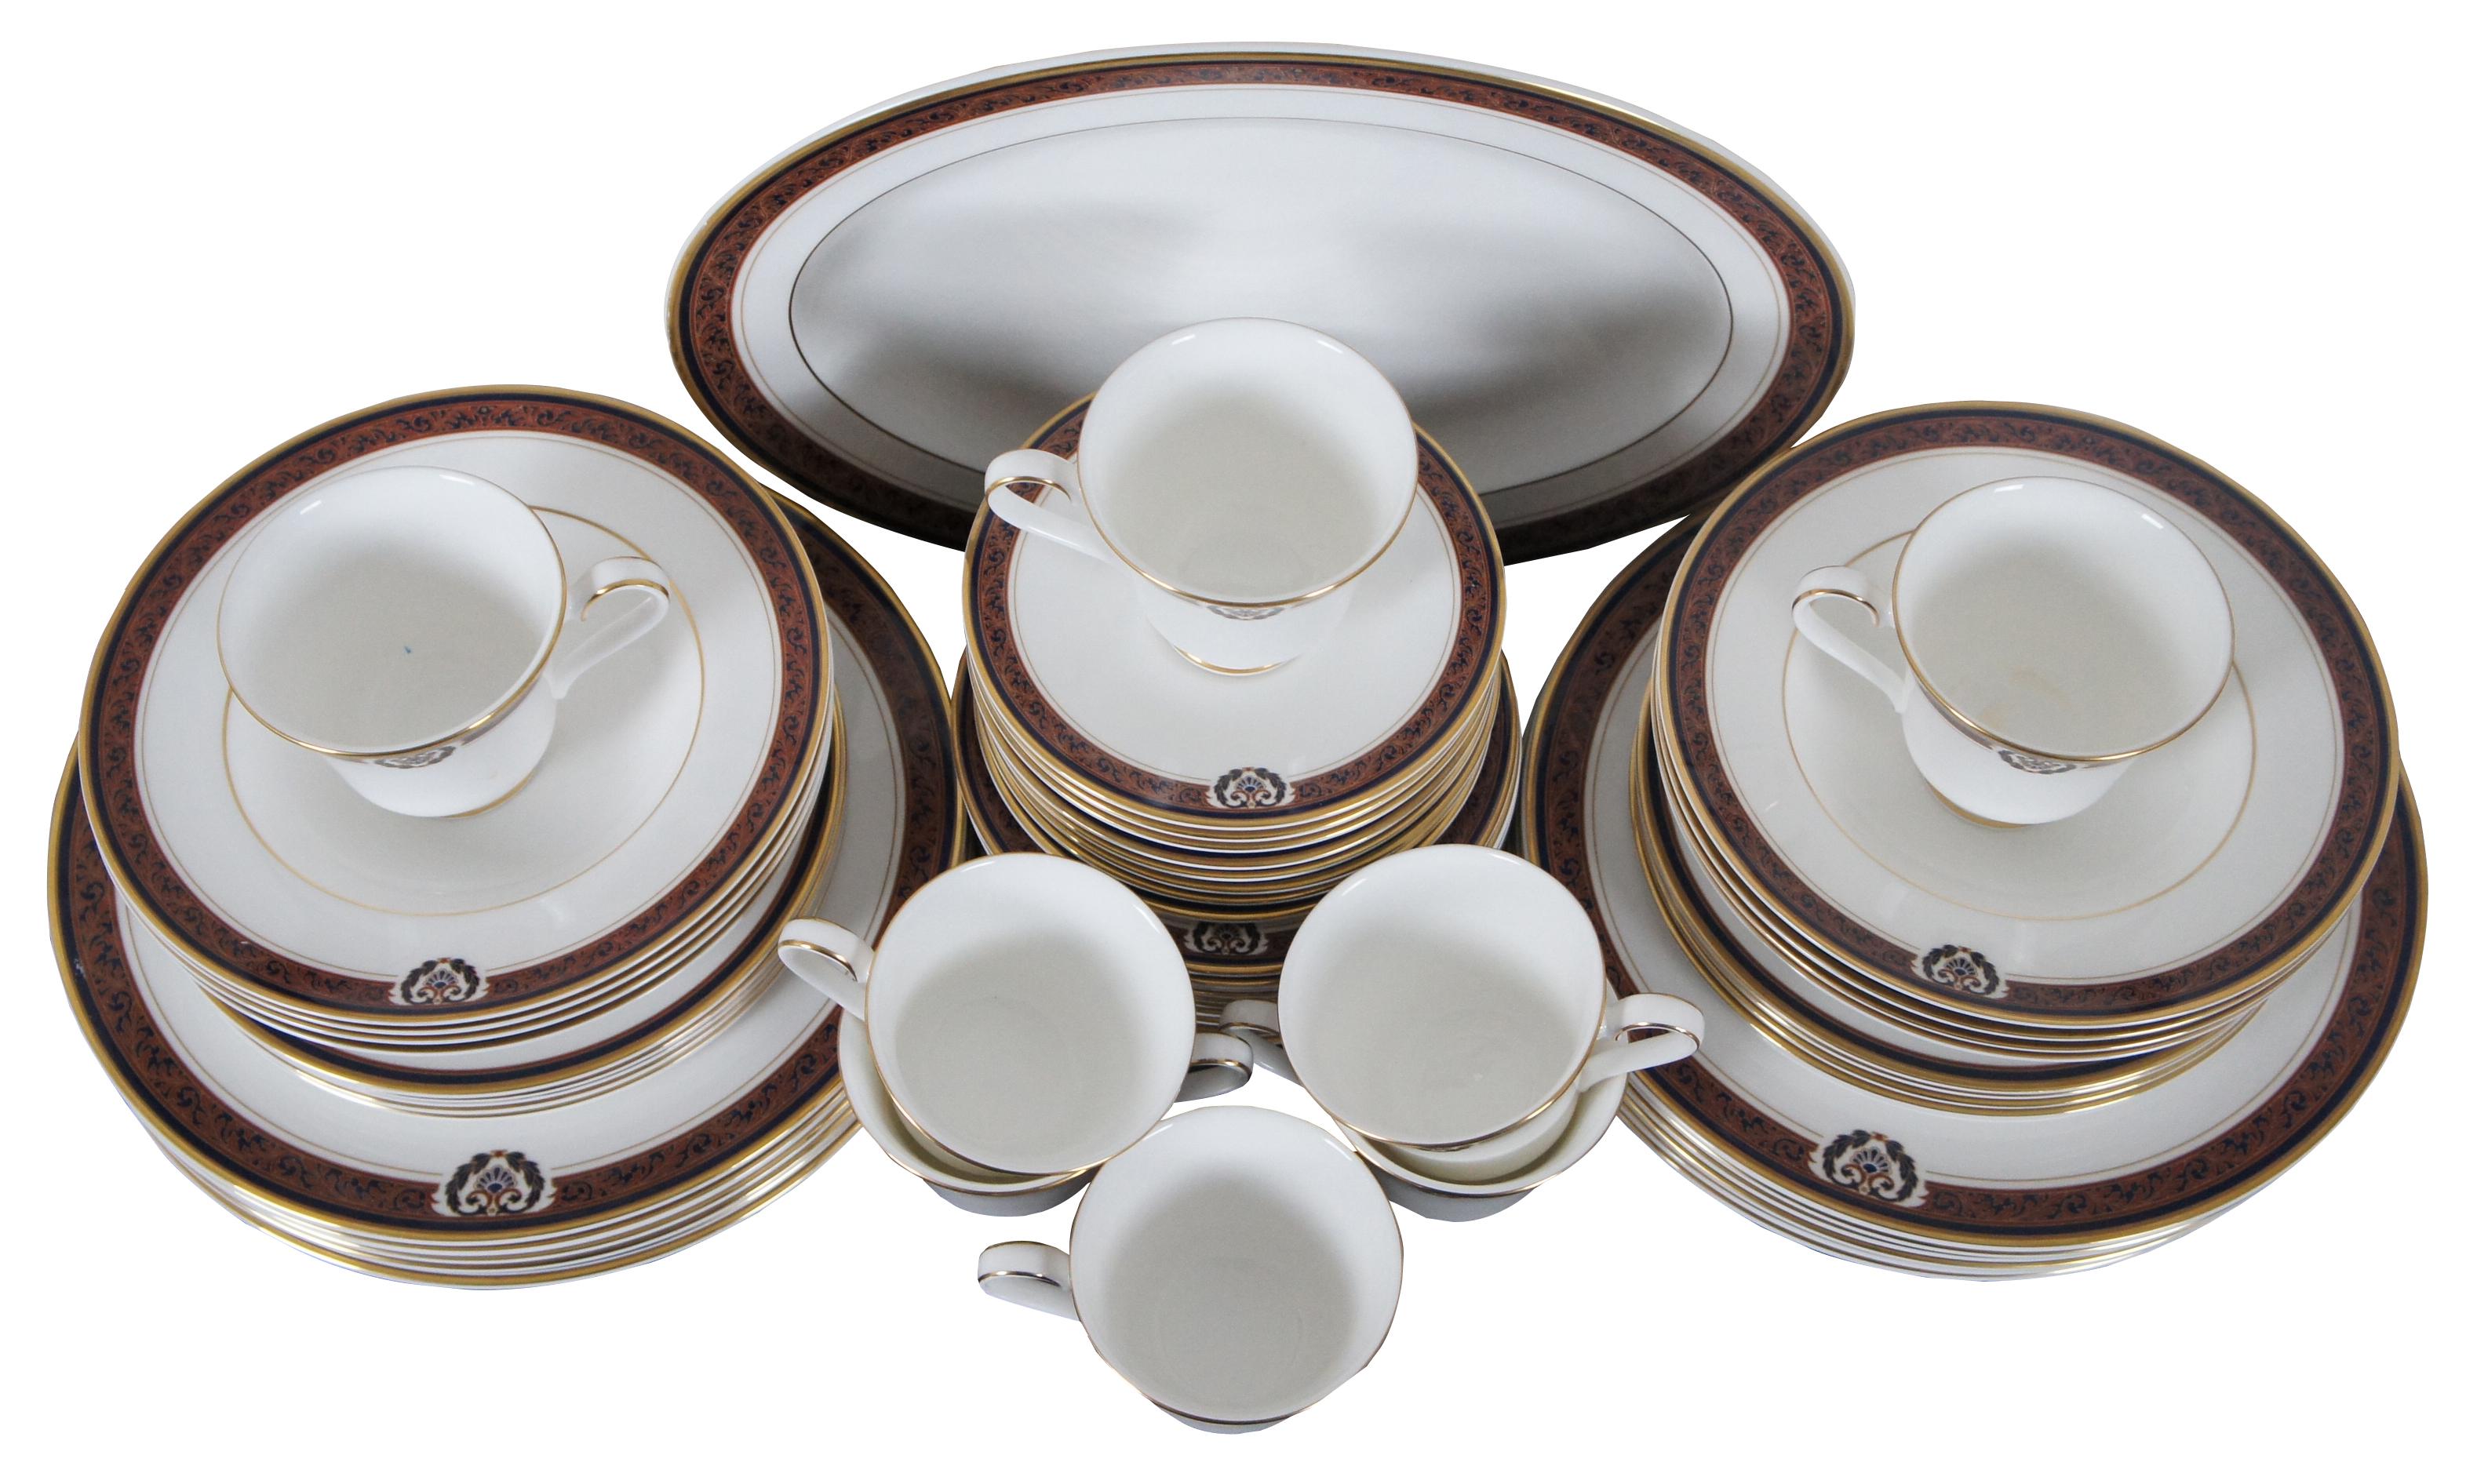 57 piece Royal Doulton fine bone china dinnerware set in pattern H5221 – Regal Crest.

Measures: 8 teacups - 3.5” x 3” / oval platter - 13.5” x 10.5” x 1.25” / 12 dinner plates - 10.5” x 0.75” / 8 soup bowls - 8” x 1.5” / 10 salad plates - 8” x